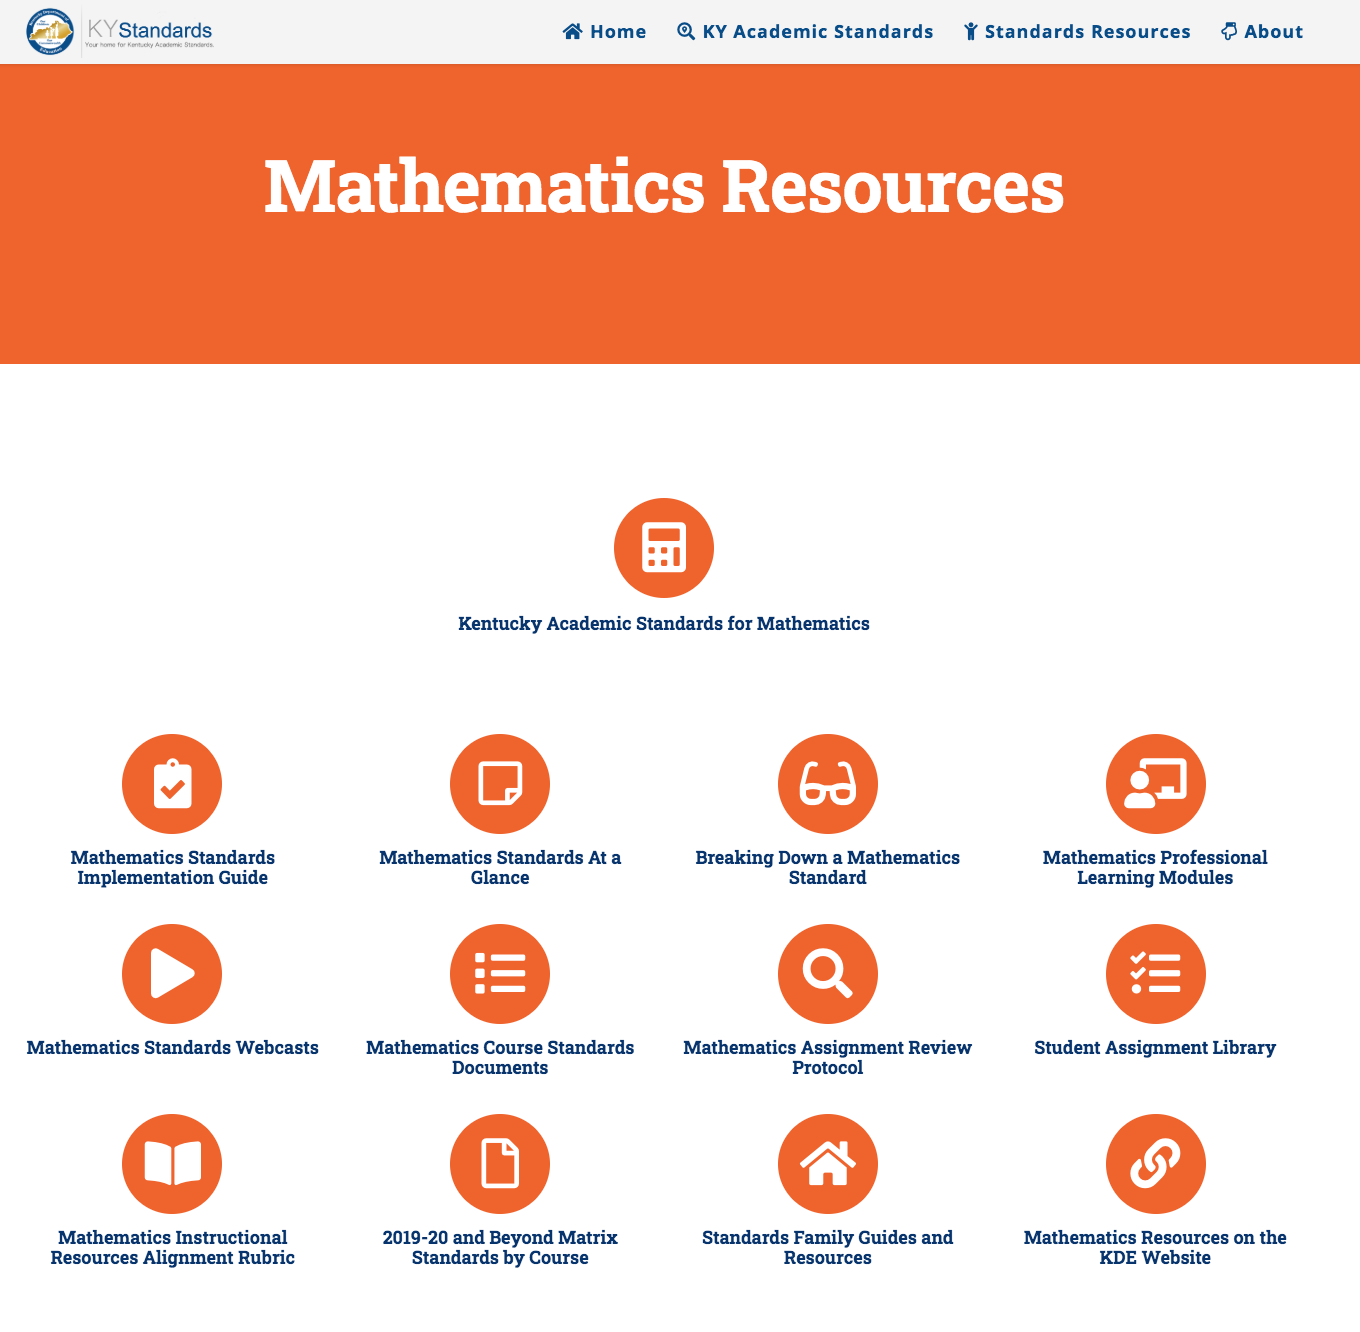 Mathematics Resources webpage on KYstandards.org